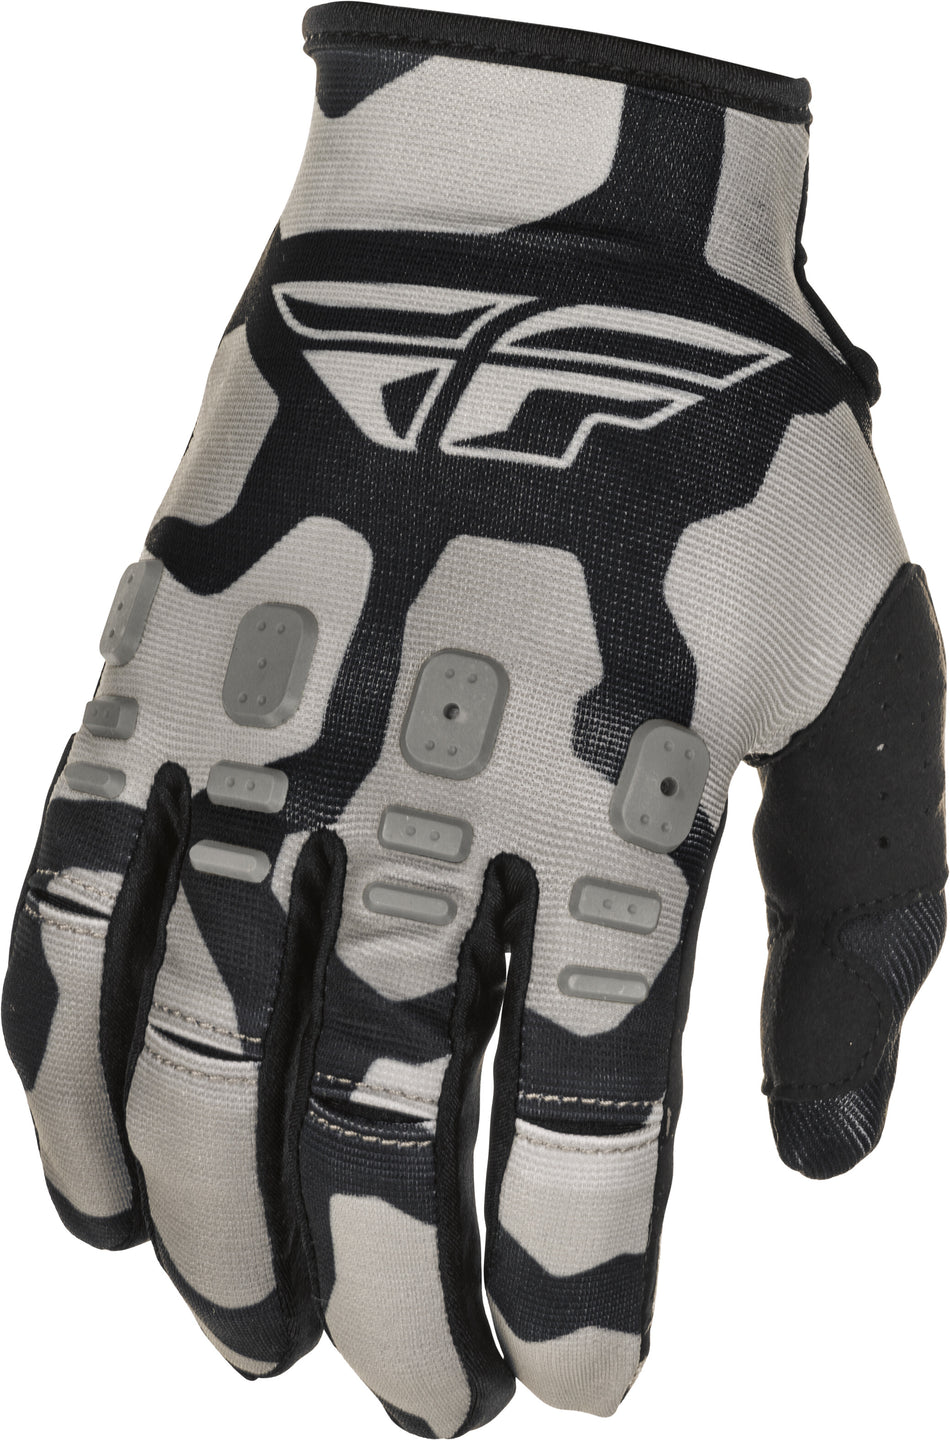 FLY RACING Kinetic K221 Gloves Black/Grey Sz 08 374-51008